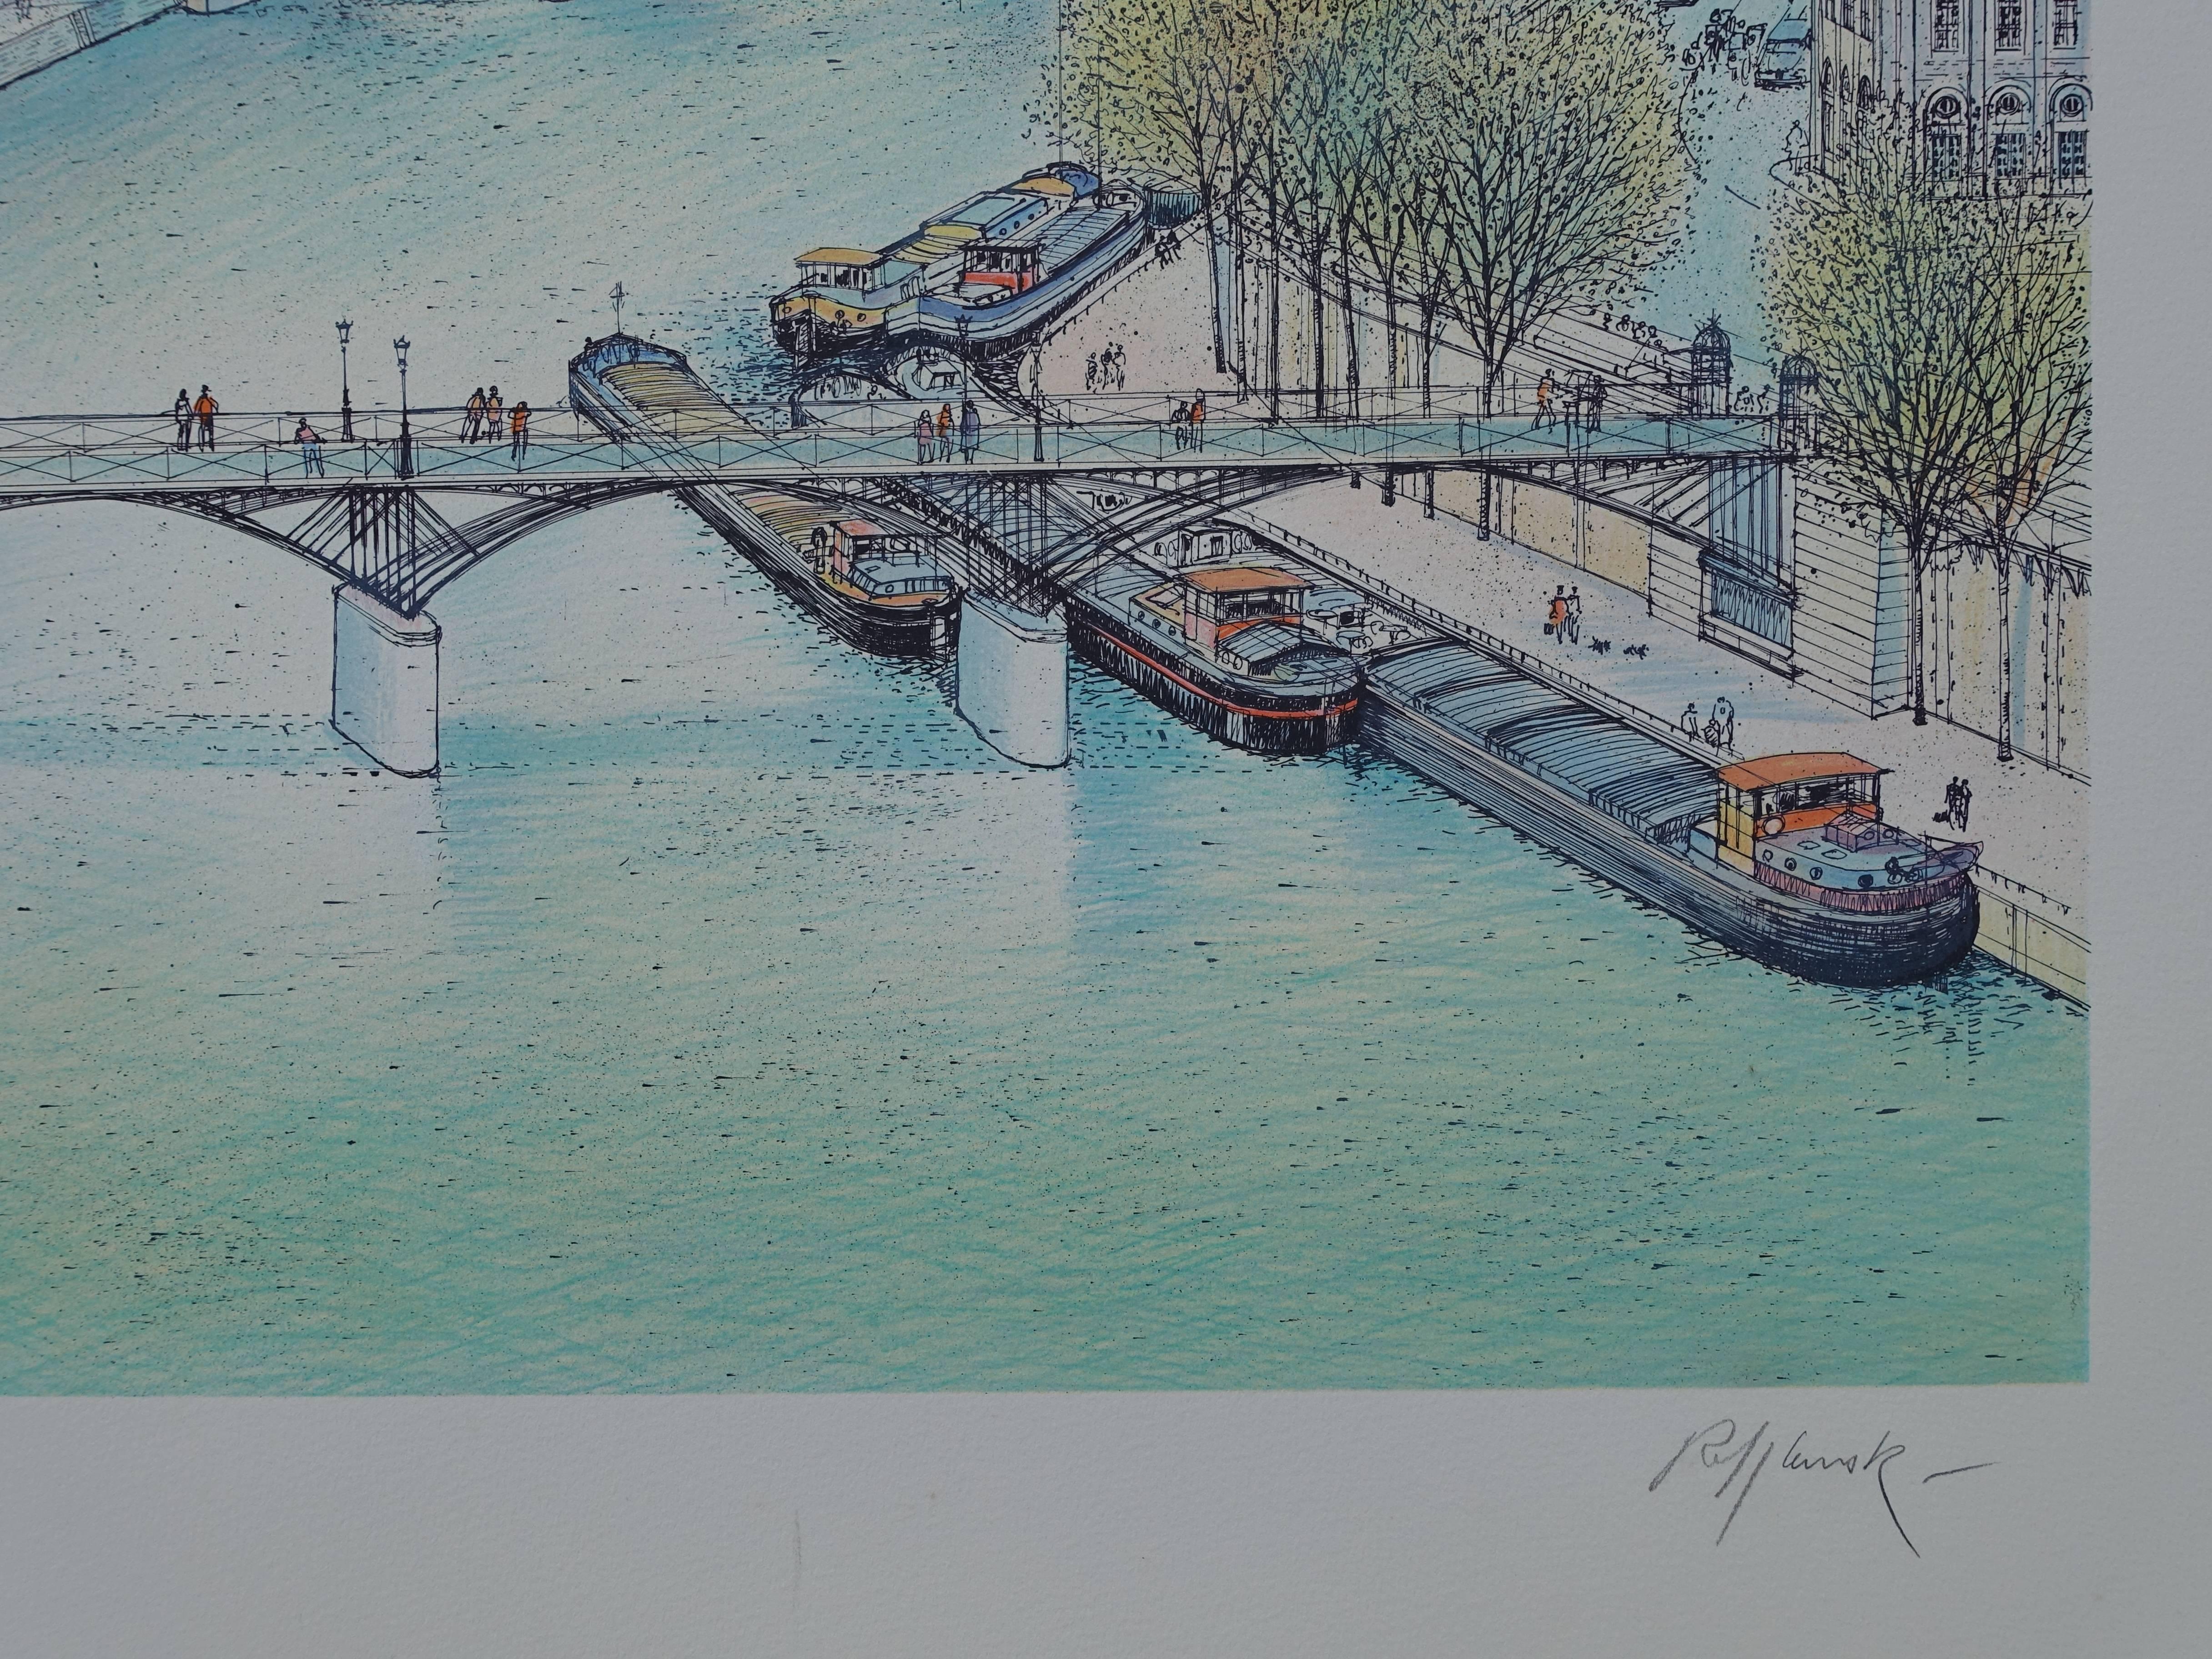 Paris : Seine River, Notre Dame & Ile de la Cite - Tall handsigned lithograph - Print by Rolf RAFFLEWSKI